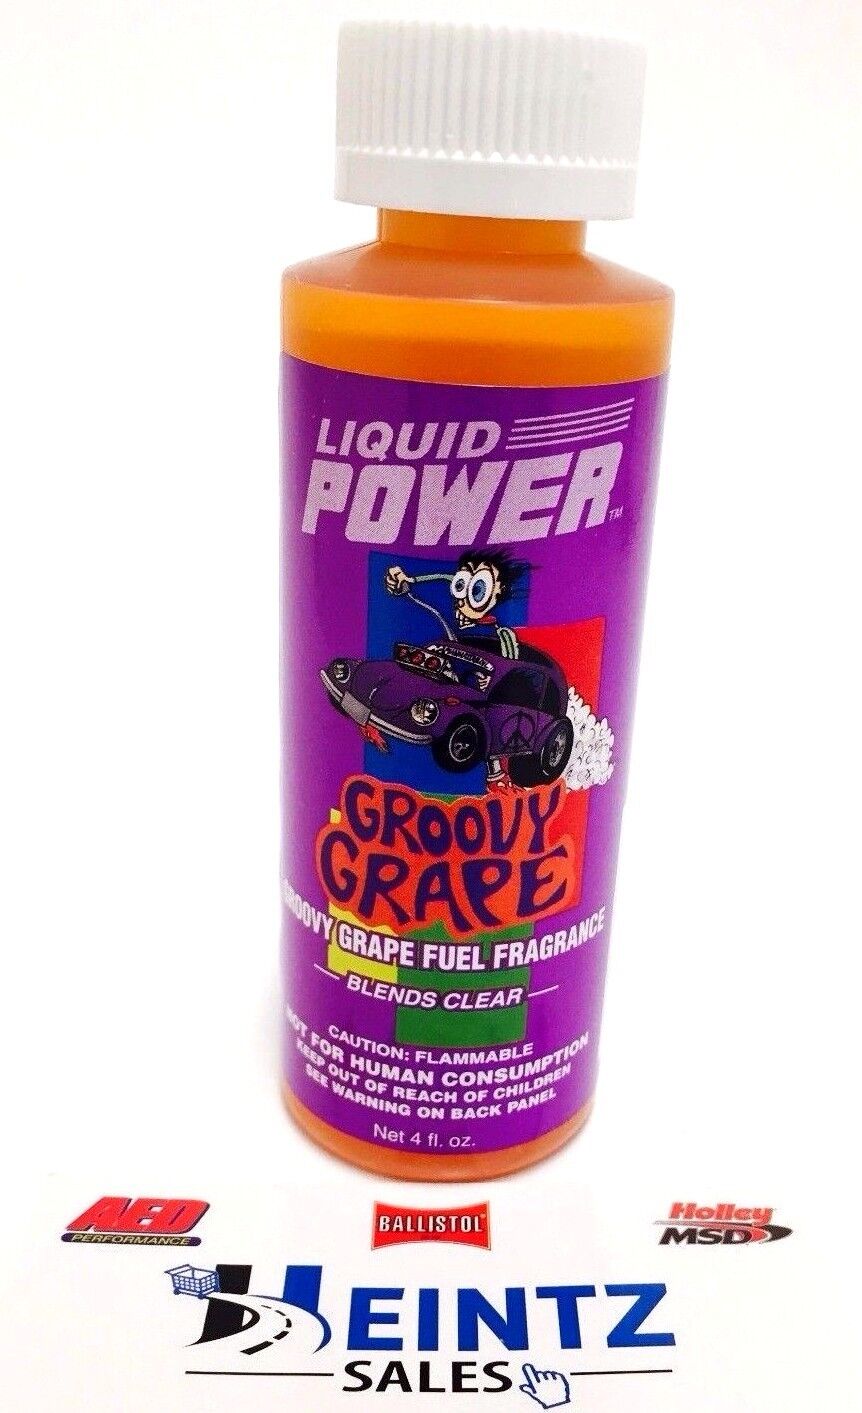 Power Plus Lubricants Groovy Grape Fuel Fragrance for Car, Motorcycle, ATV, IMCA